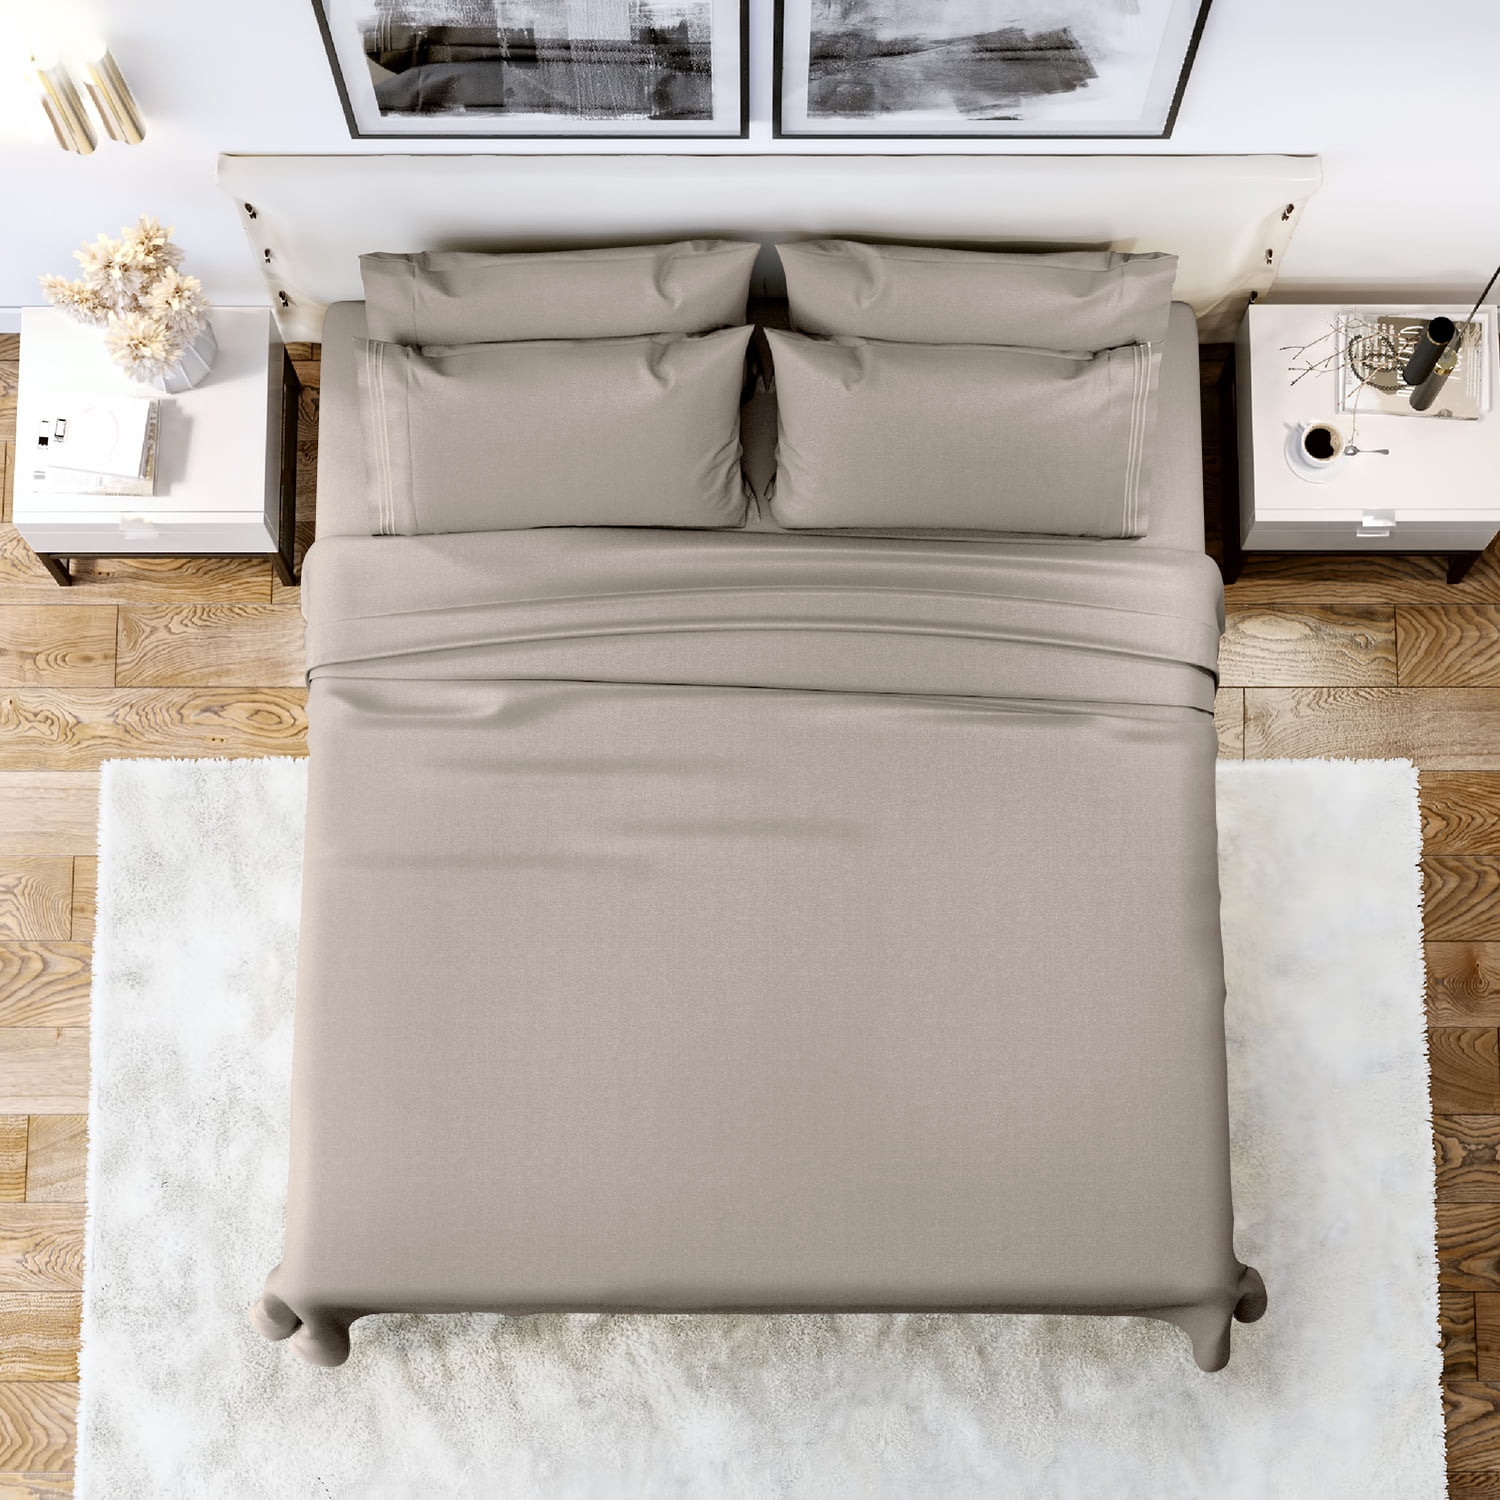 Danjor Linens Bed Sheets Set, HOTEL LUXURY 1800 Series Platinum Collection Bedding  Set, Deep Pockets, Wrinkle & Fade Resistant, Hypoallergenic Sheet & Pillow  Ca…